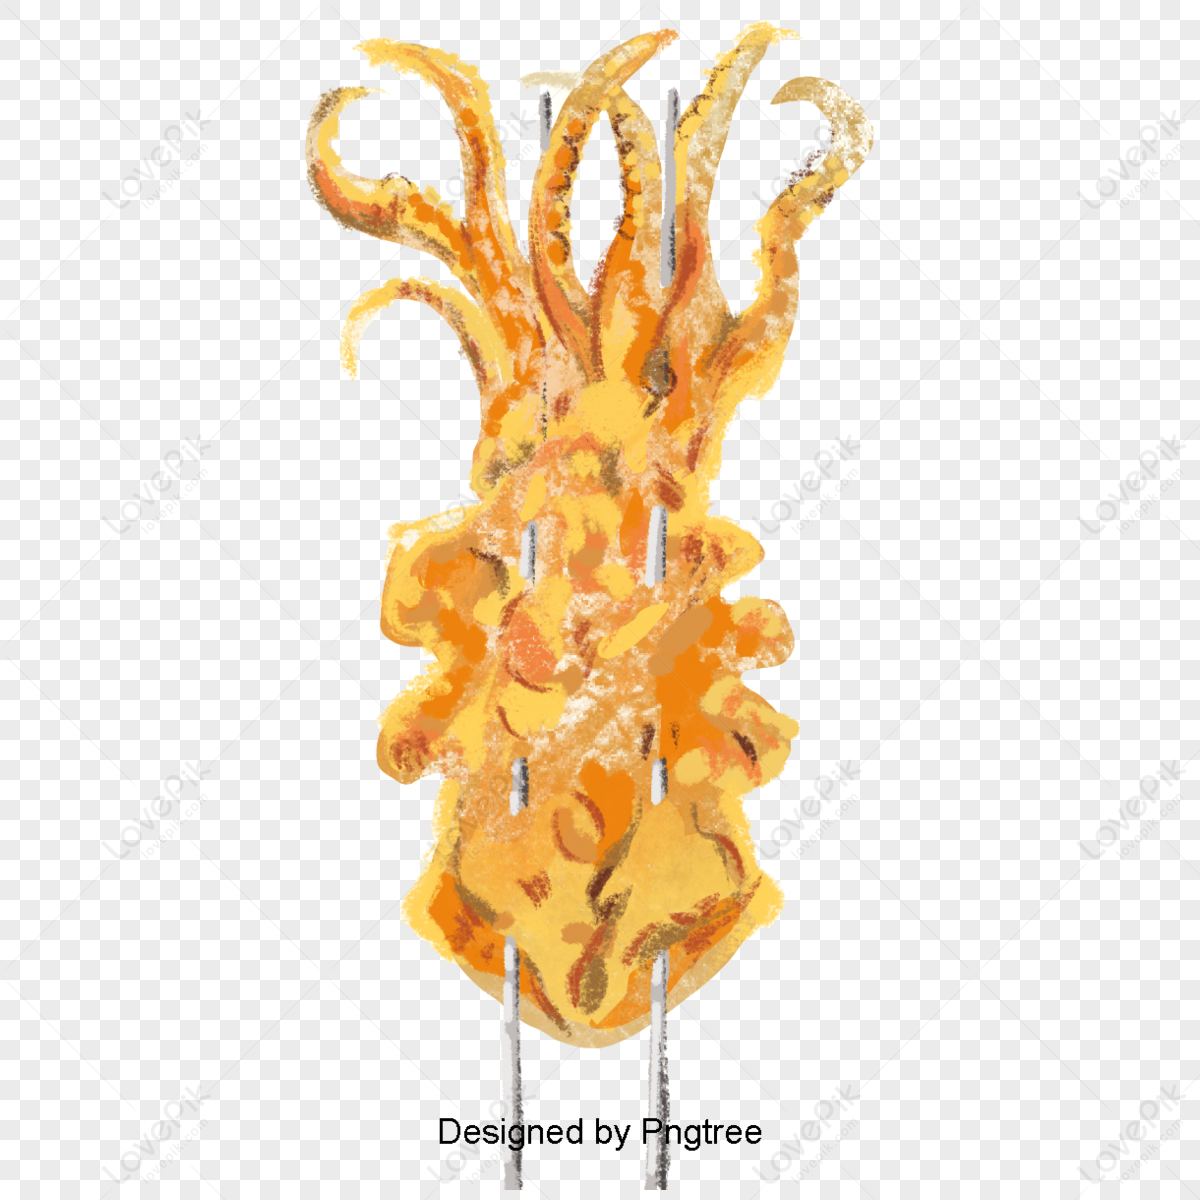 south korea street snacks octopus tempura fried octopus hand drawn illustration png image